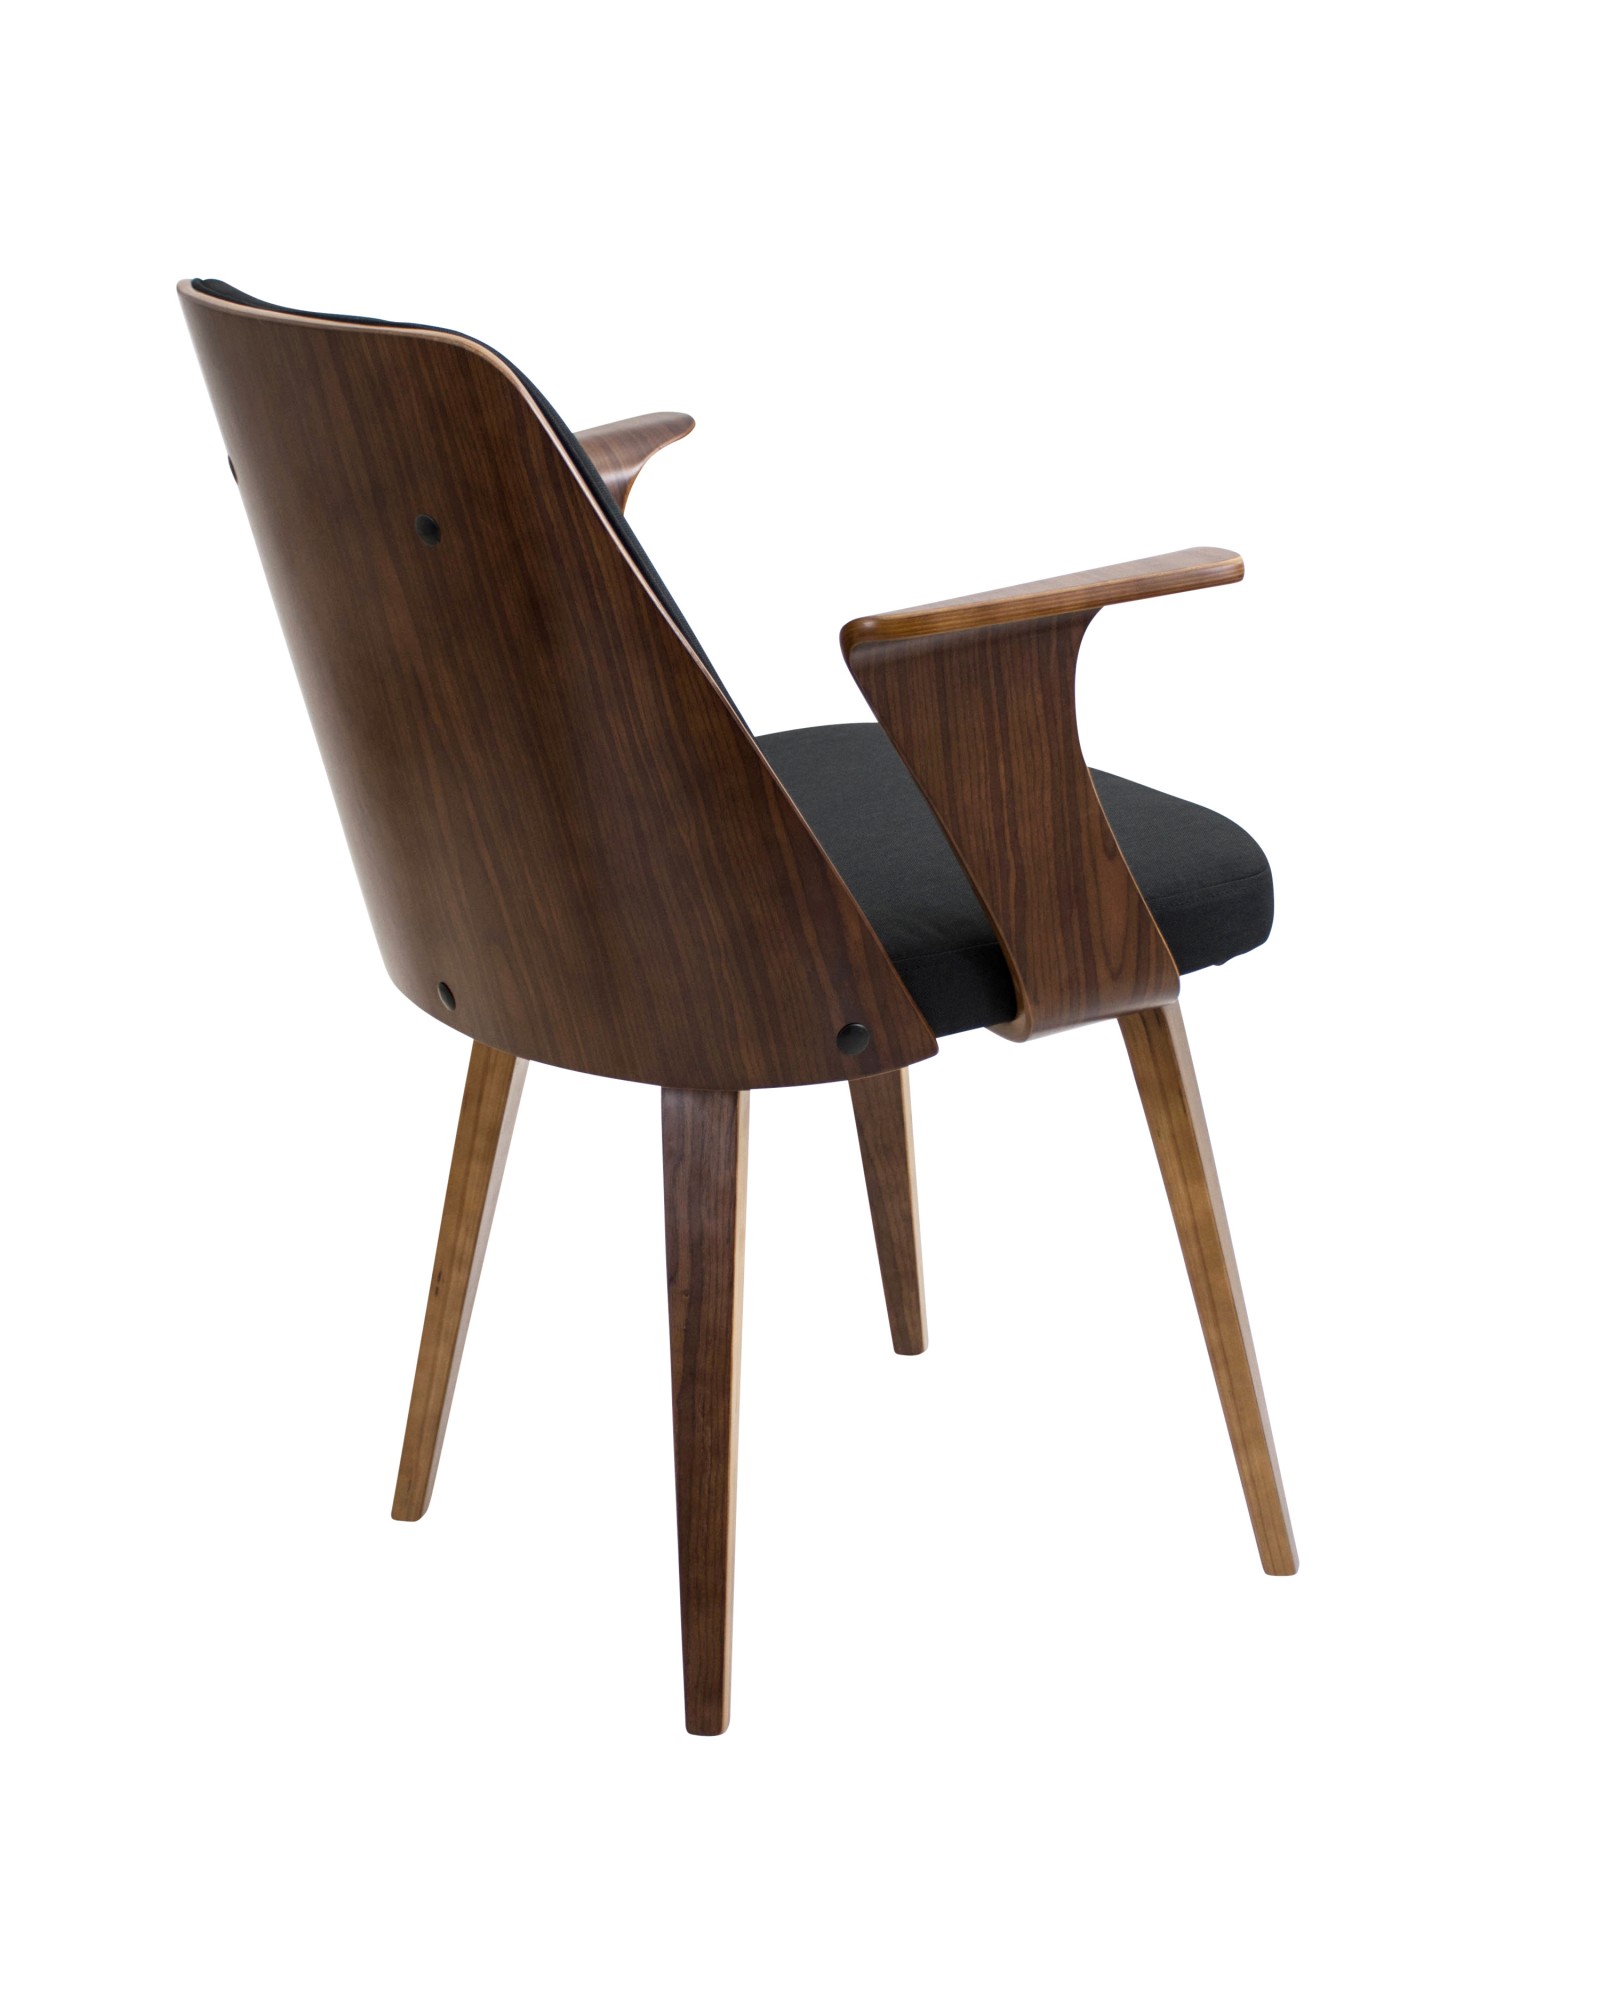 Verdana Mid-Century Modern Dining/Accent Chair in Walnut with Black Fabric